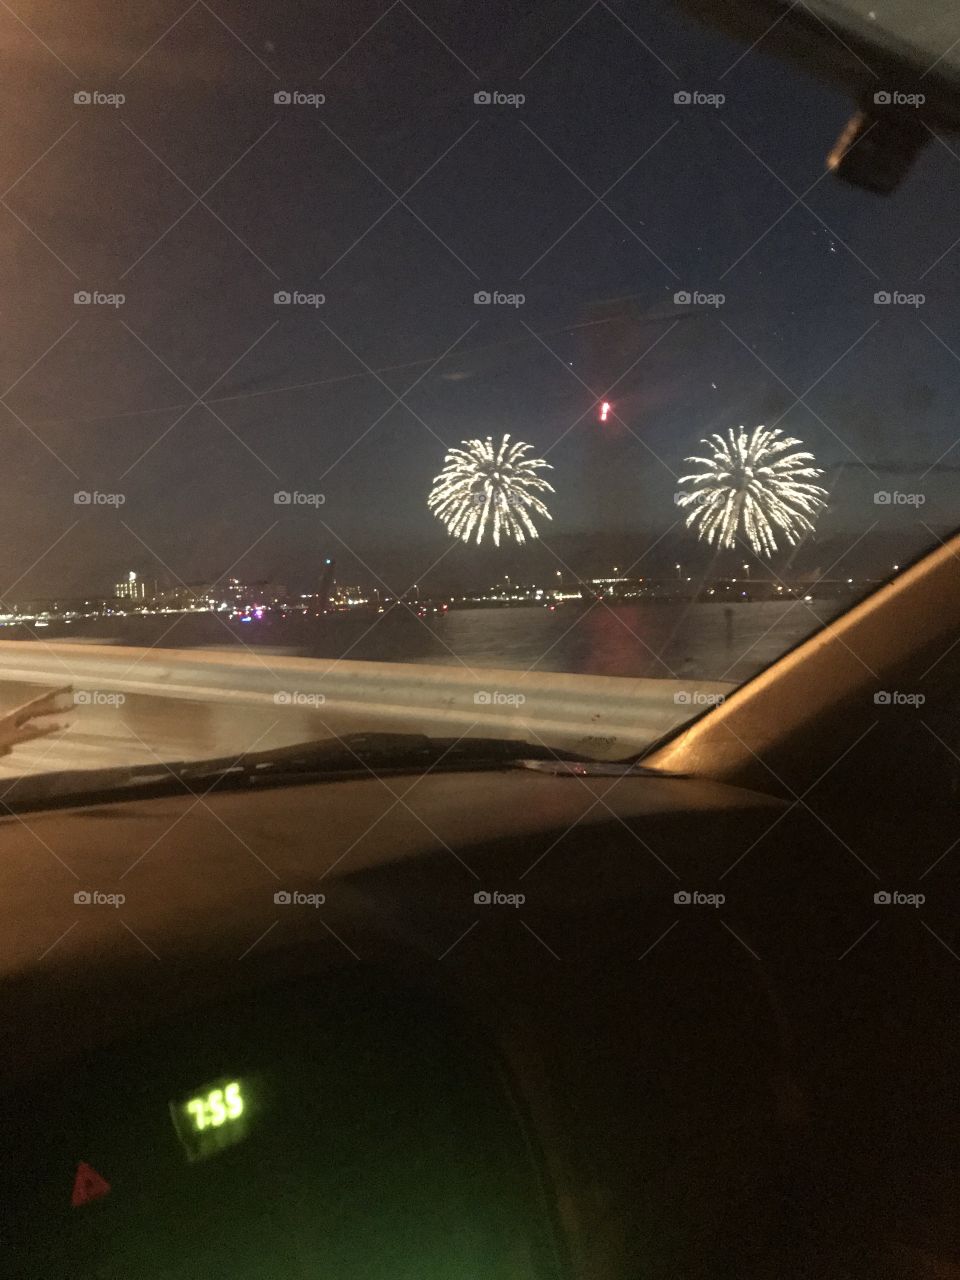 Late night firework blast